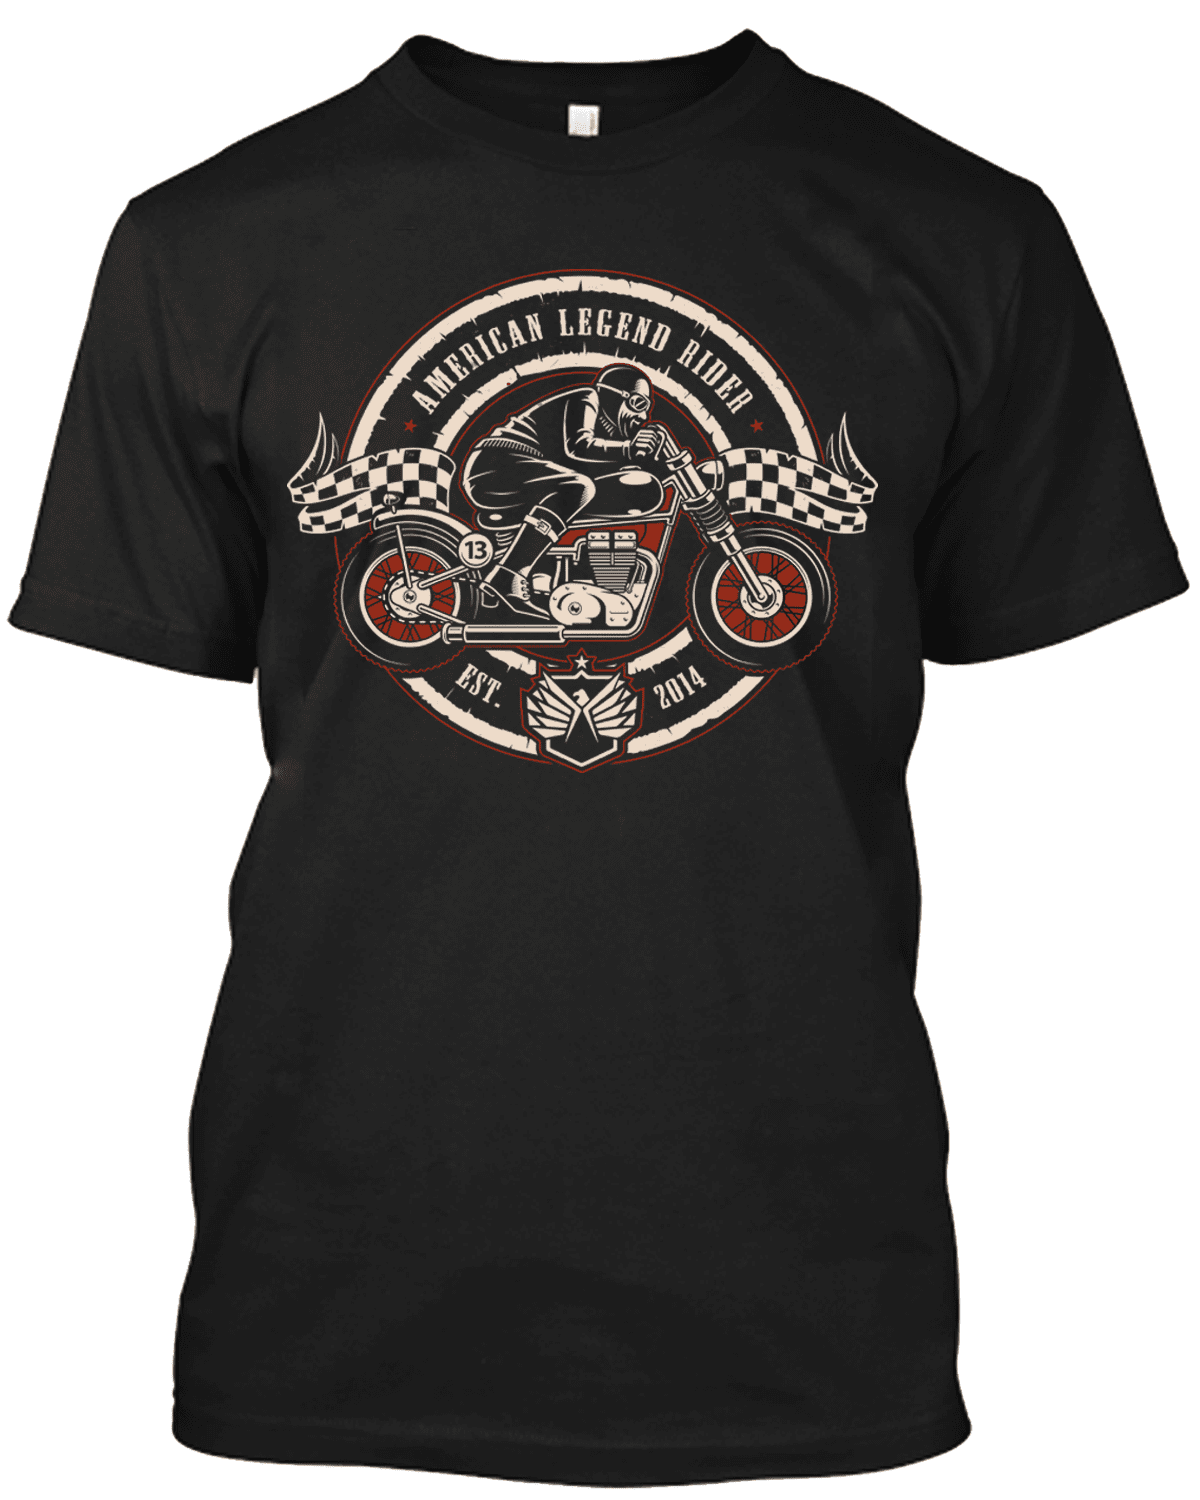 American Legend Rider T-shirt - American Legend Rider